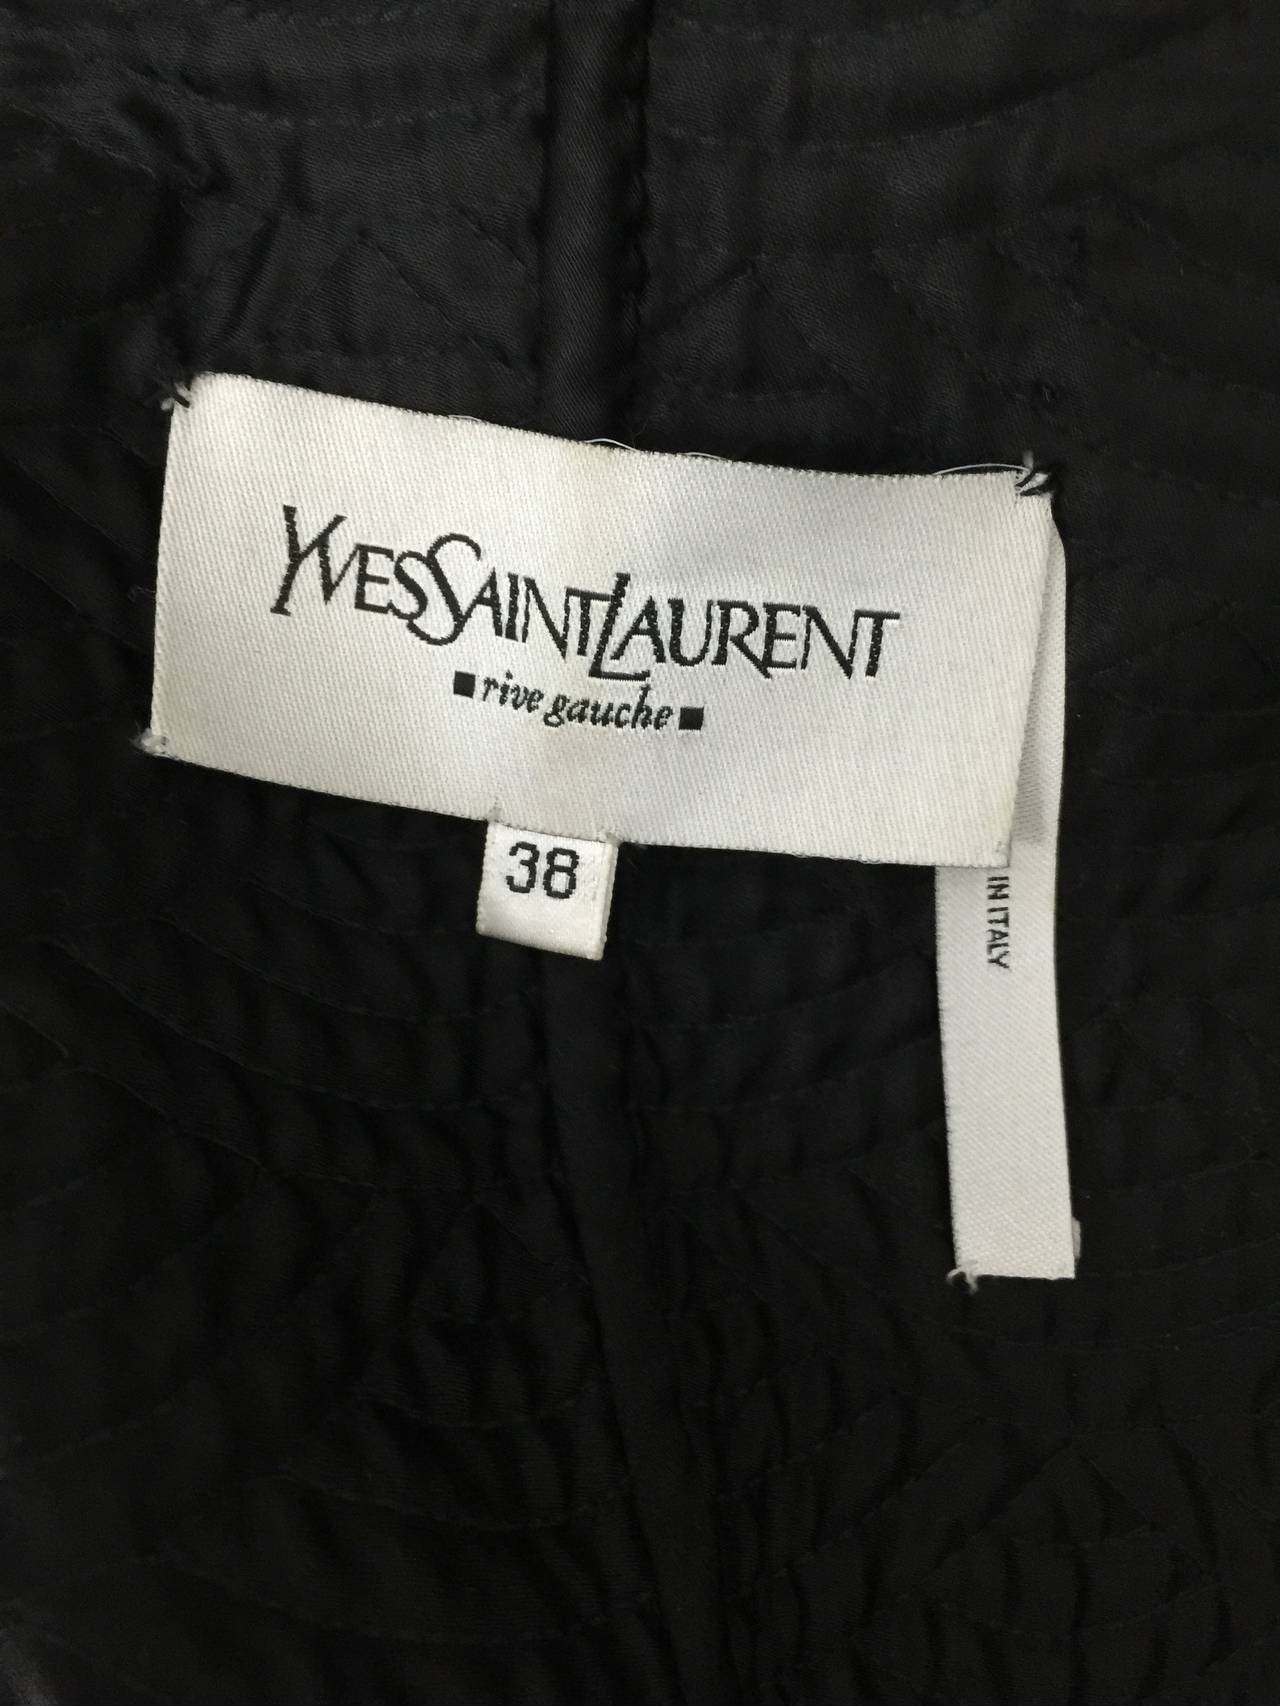 2004 TOM FORD/YVES SAINT LAURENT quilted leather jacket w/ mink fur belt 3